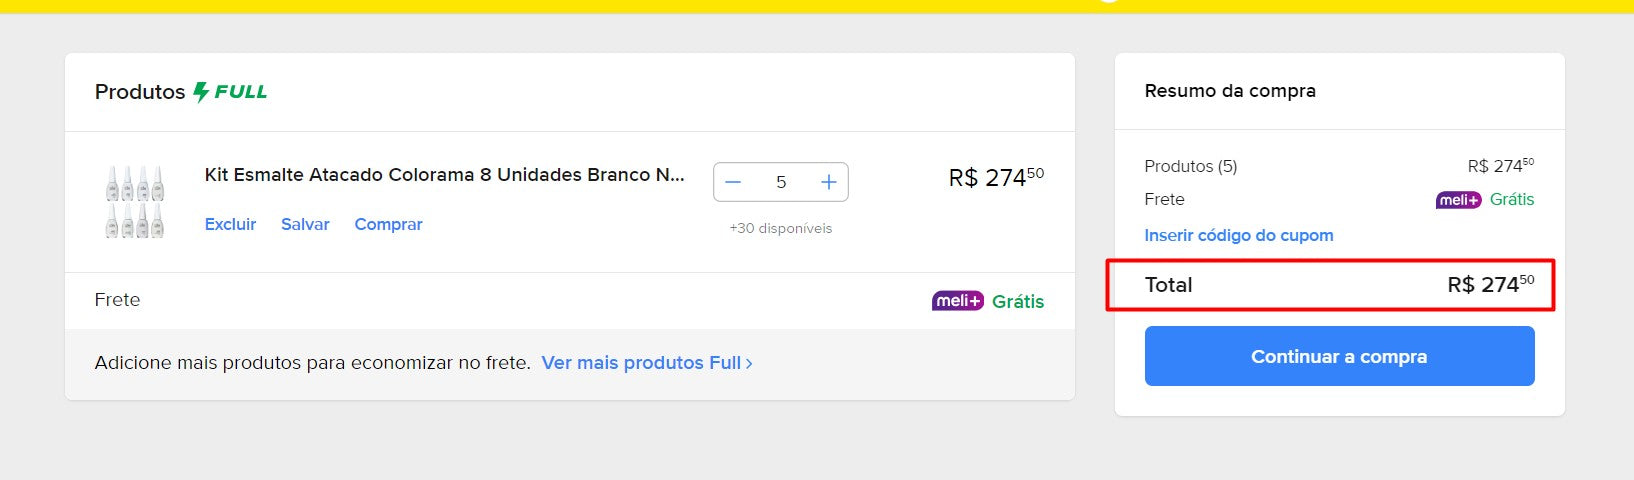 Personal shopper | Acquista dal Brasile - Kits para manicure - 9 kit - DDP